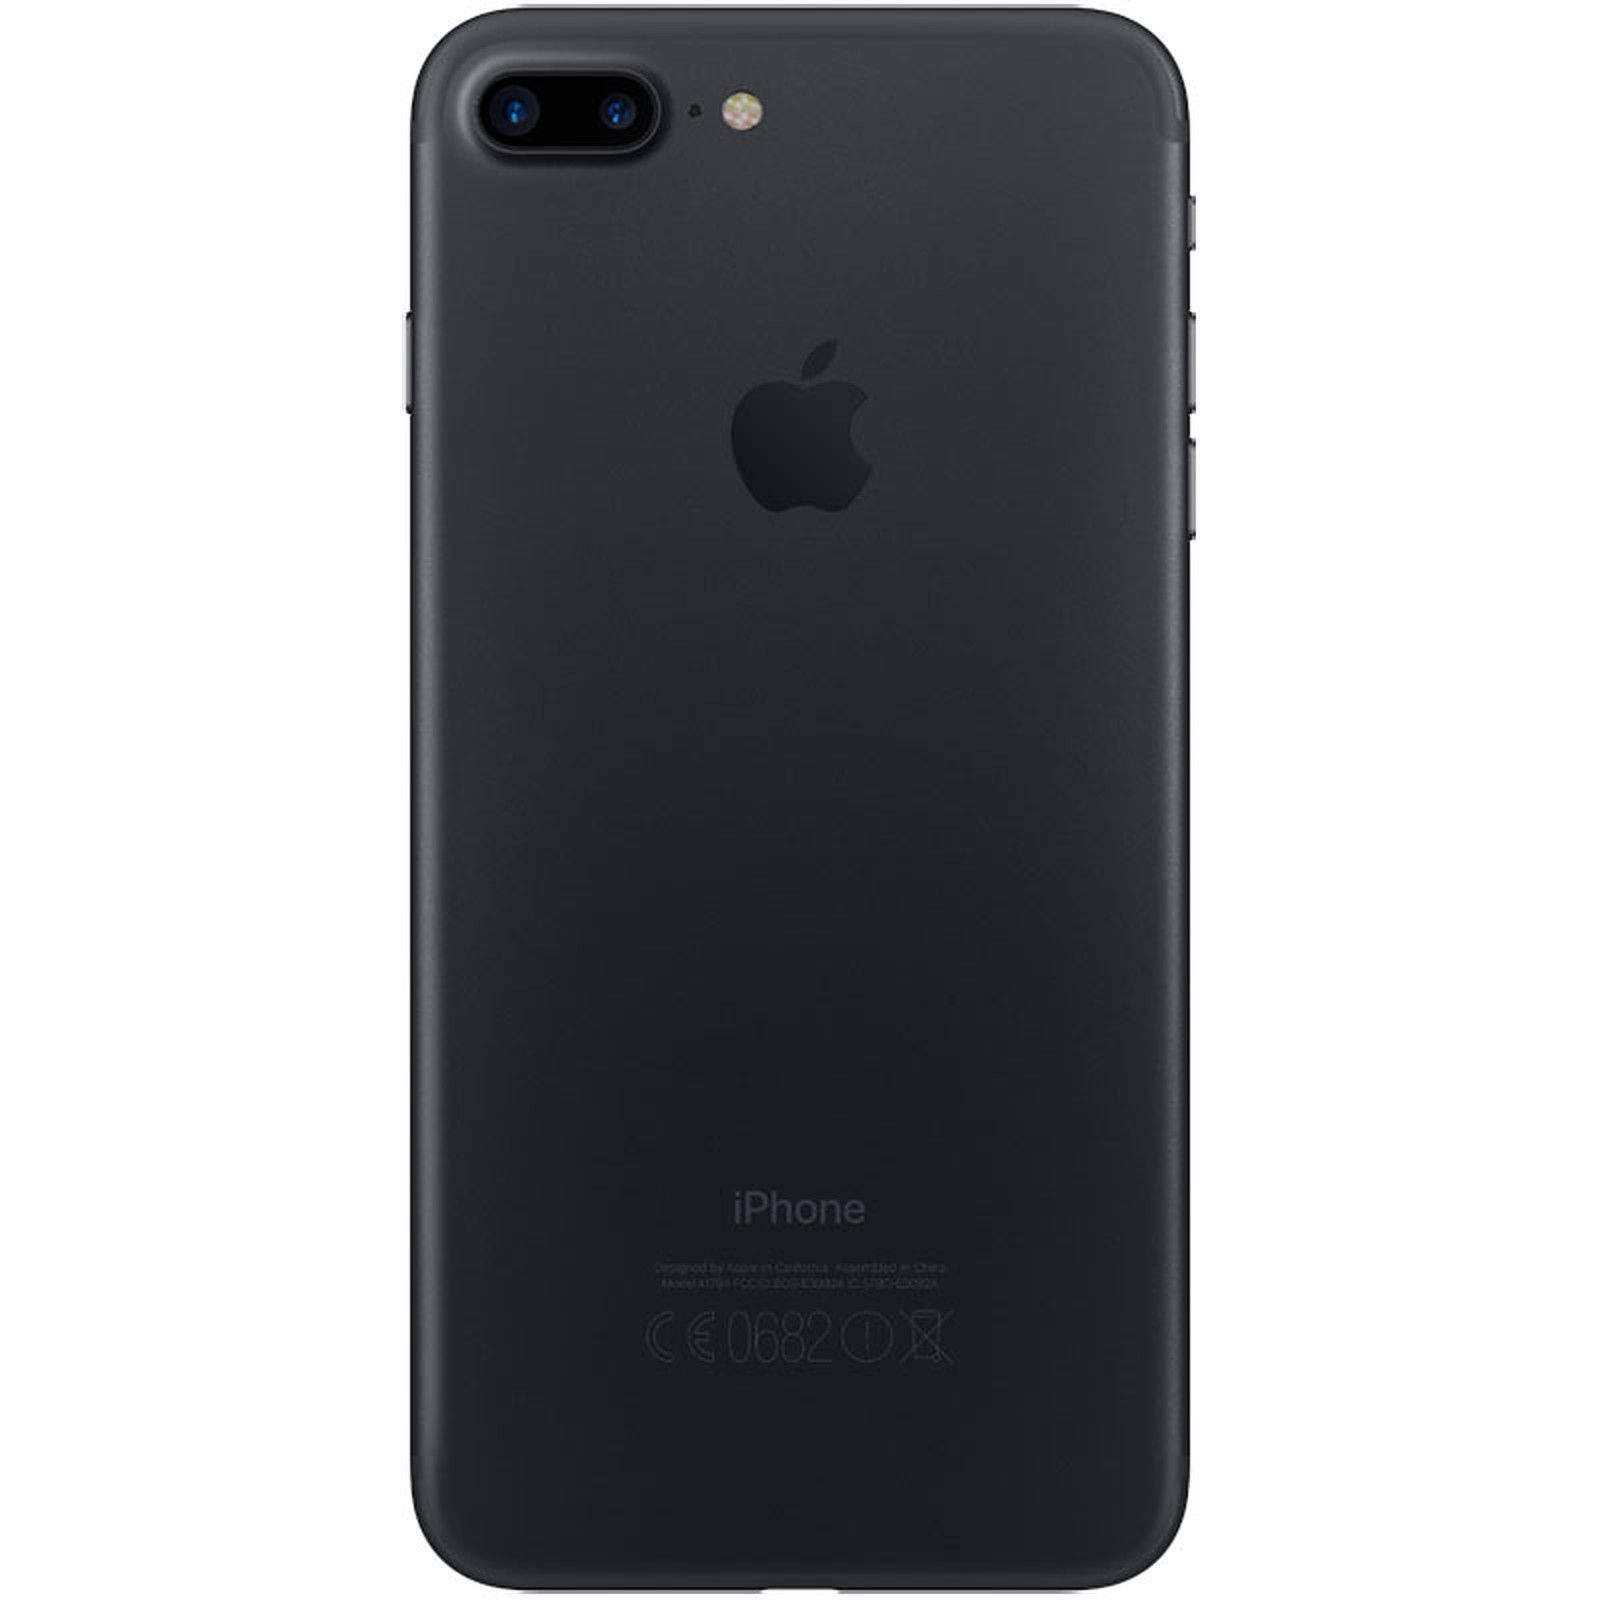 GB schwarz REFURBISHED GB Plus 128 (*) iPhone 128 7 APPLE